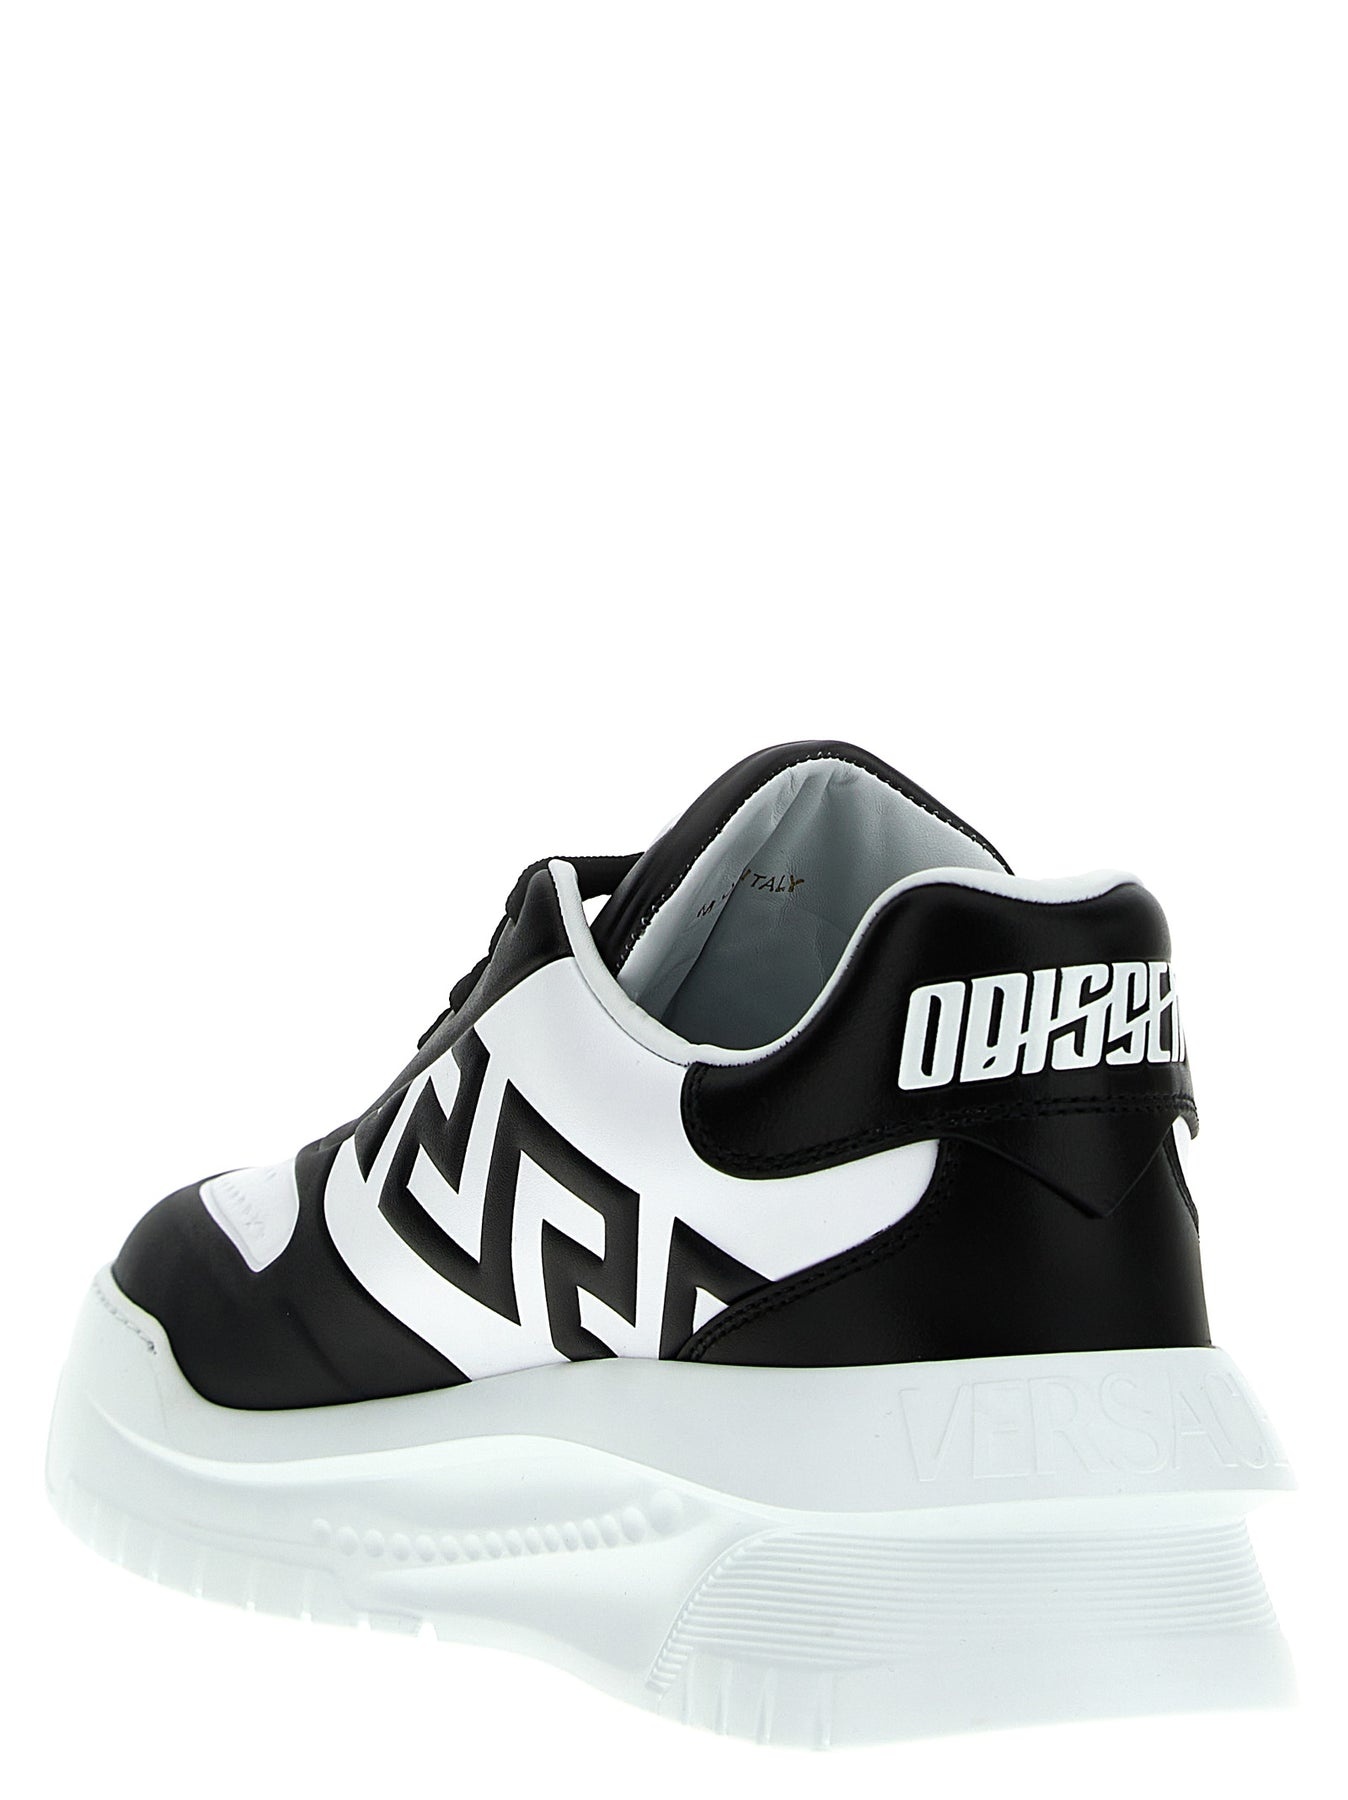 Odissea Greca Sneakers White/Black - 3